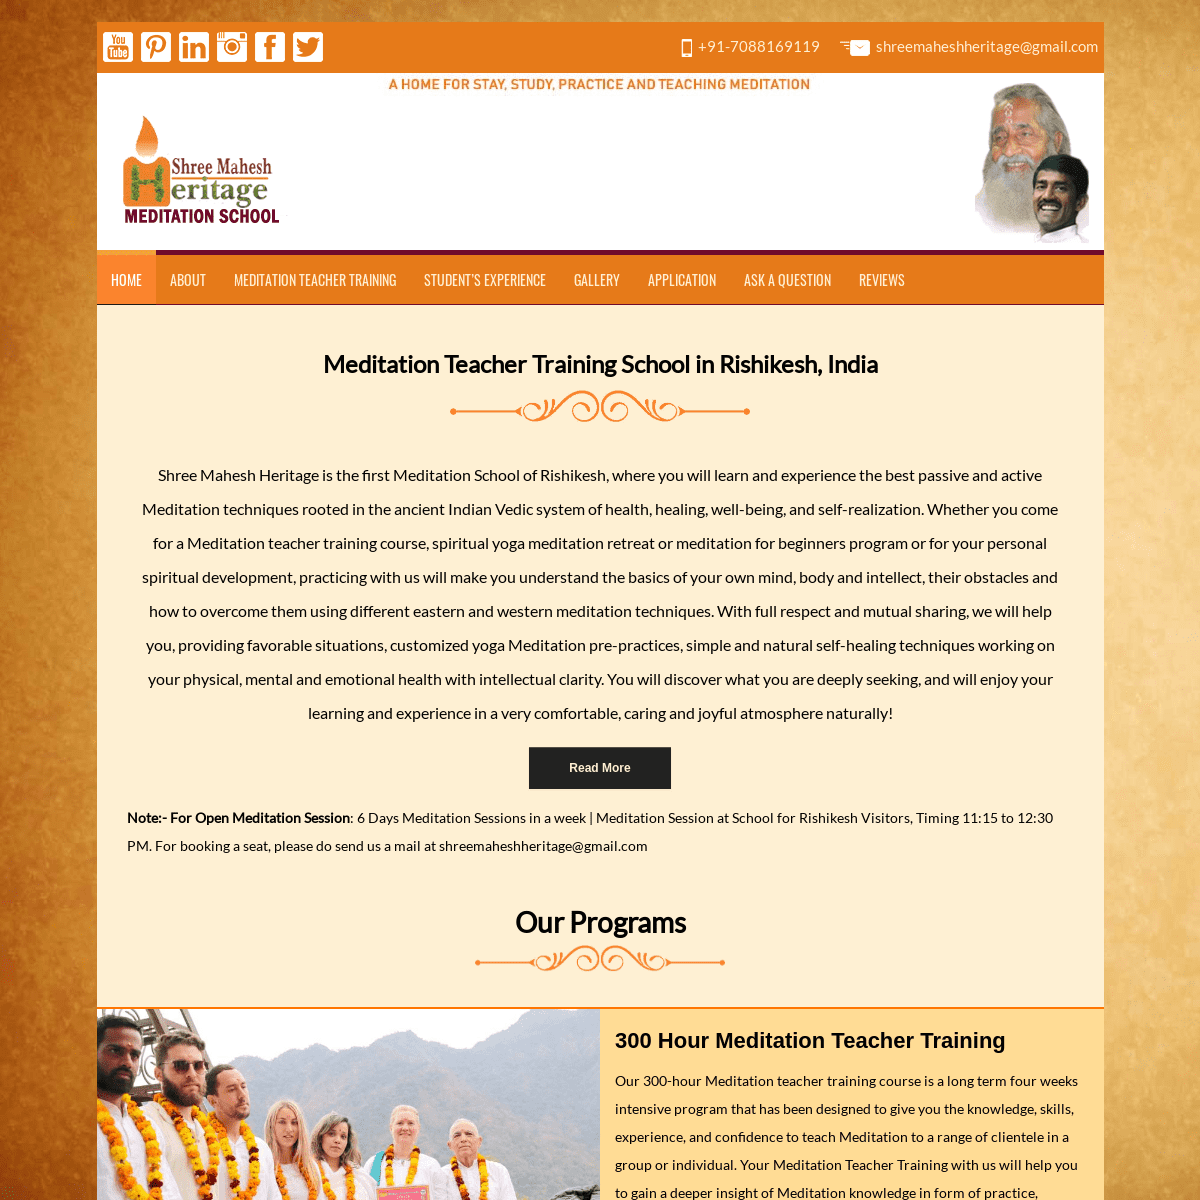 A complete backup of meditationschoolindia.org